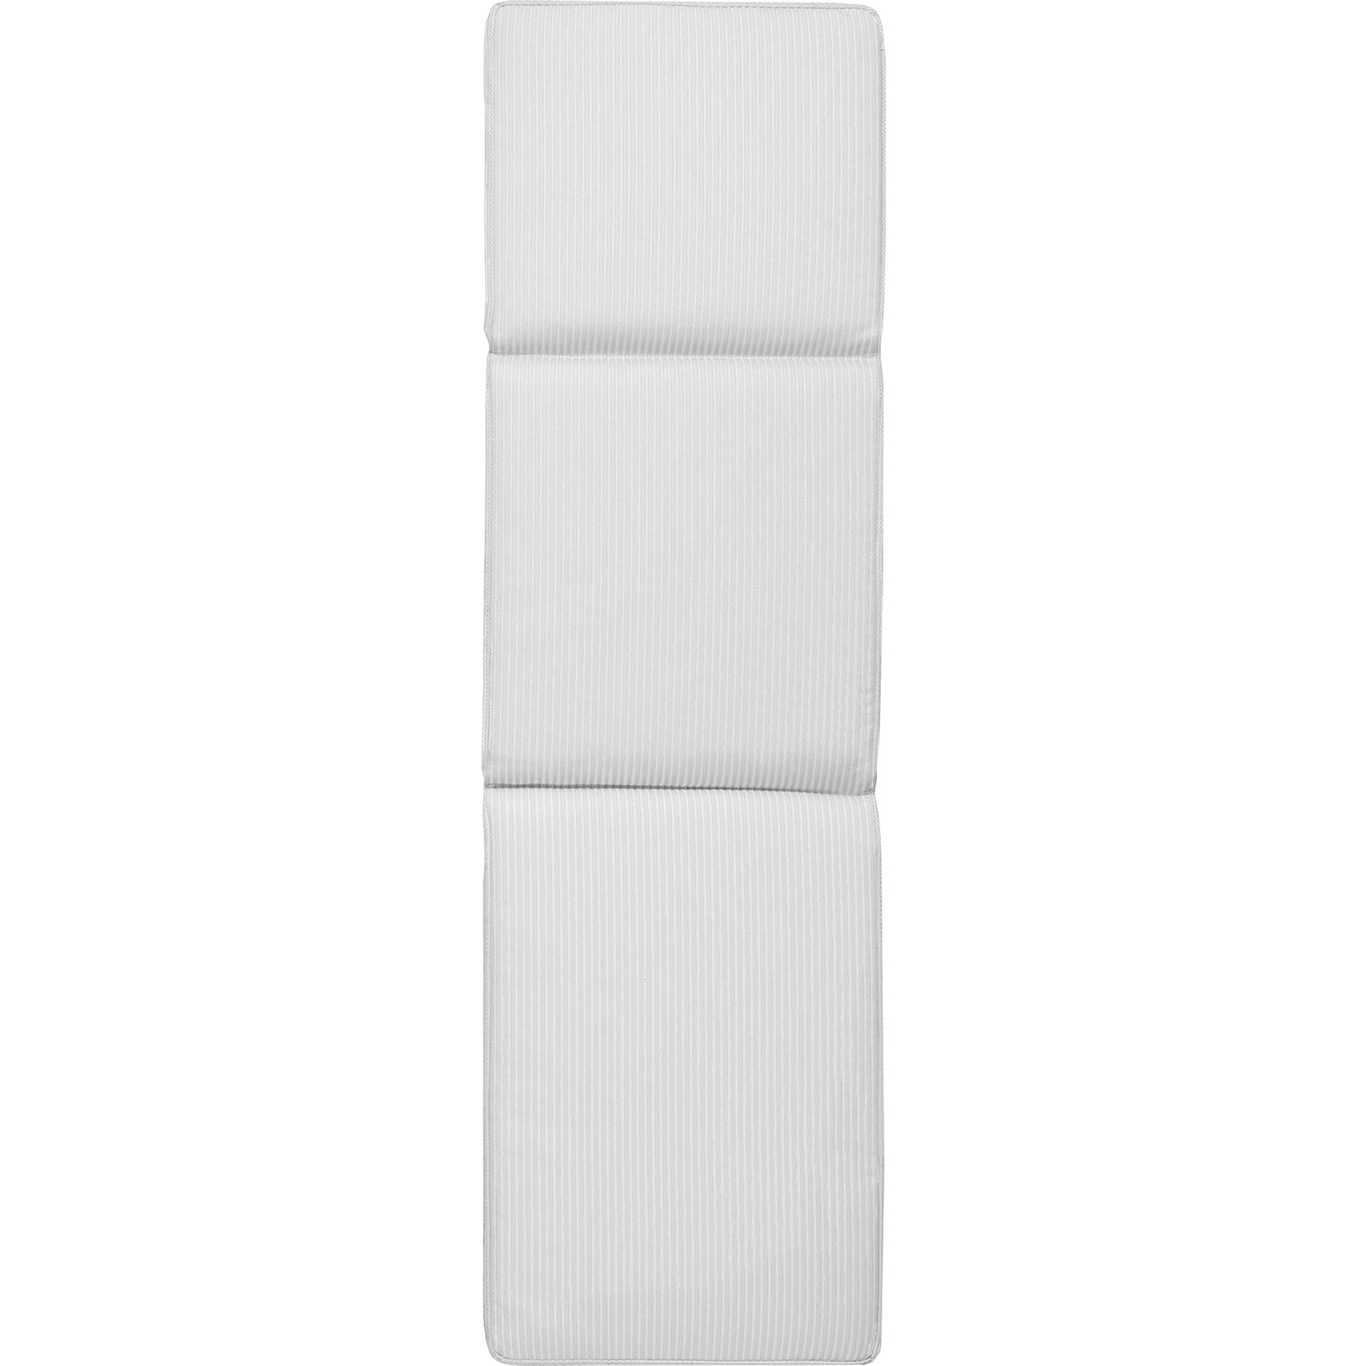 Narrow Stripe Sunbed Cushion 50x186 cm, White